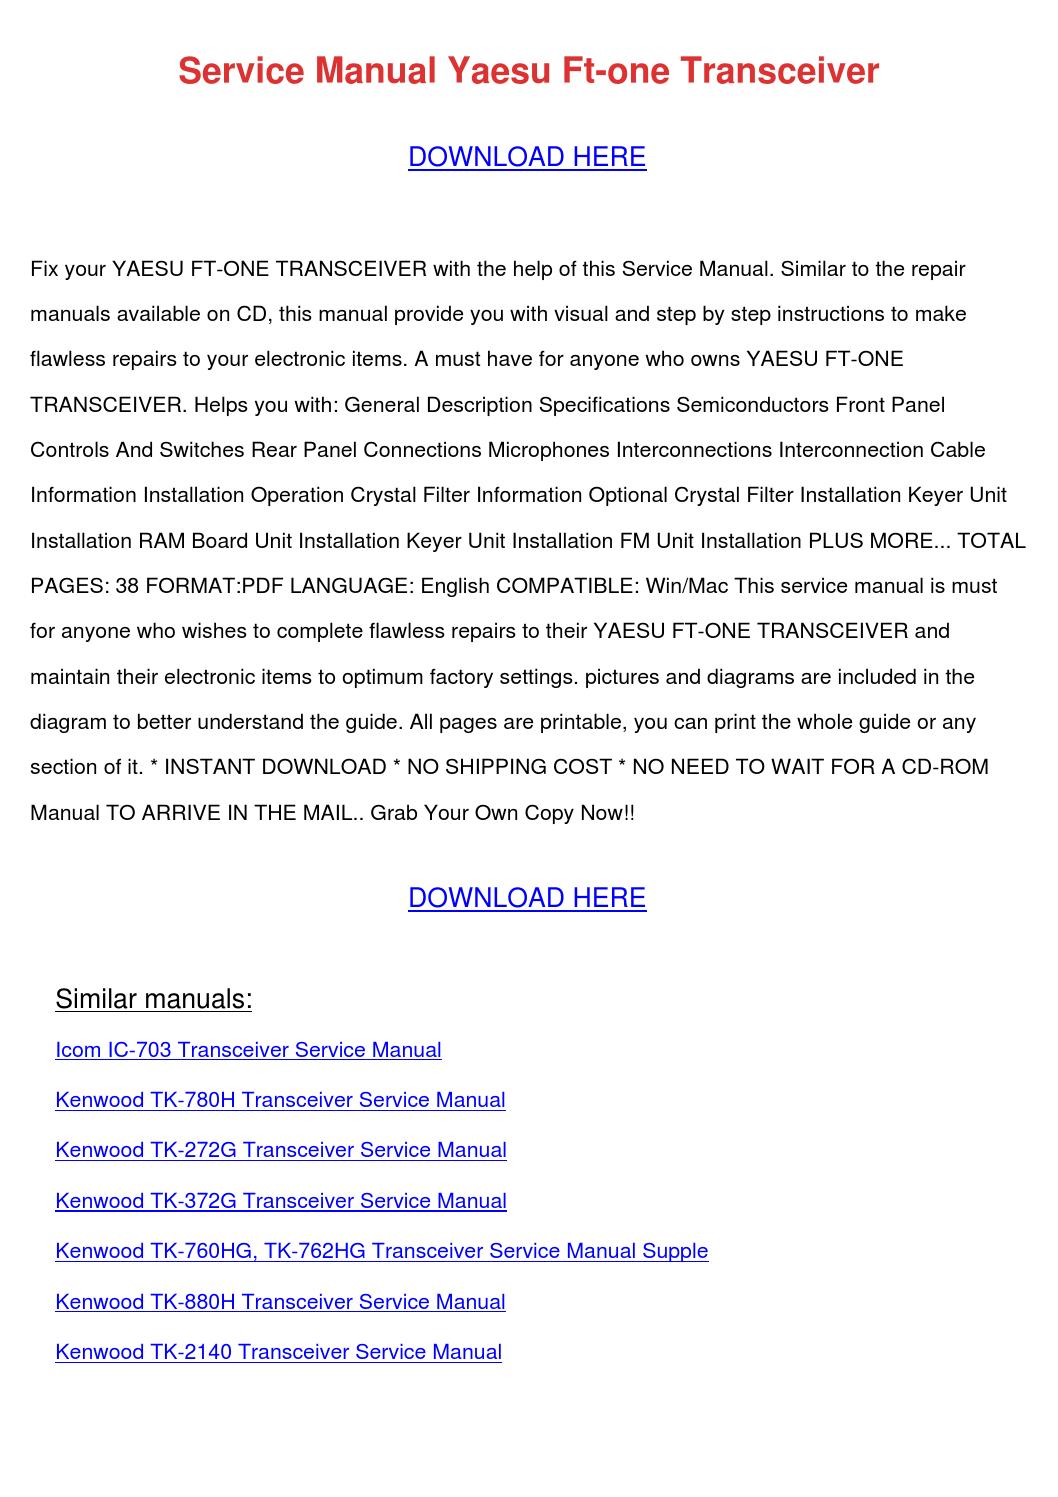 Sgc transceiver service or technical manual pdf